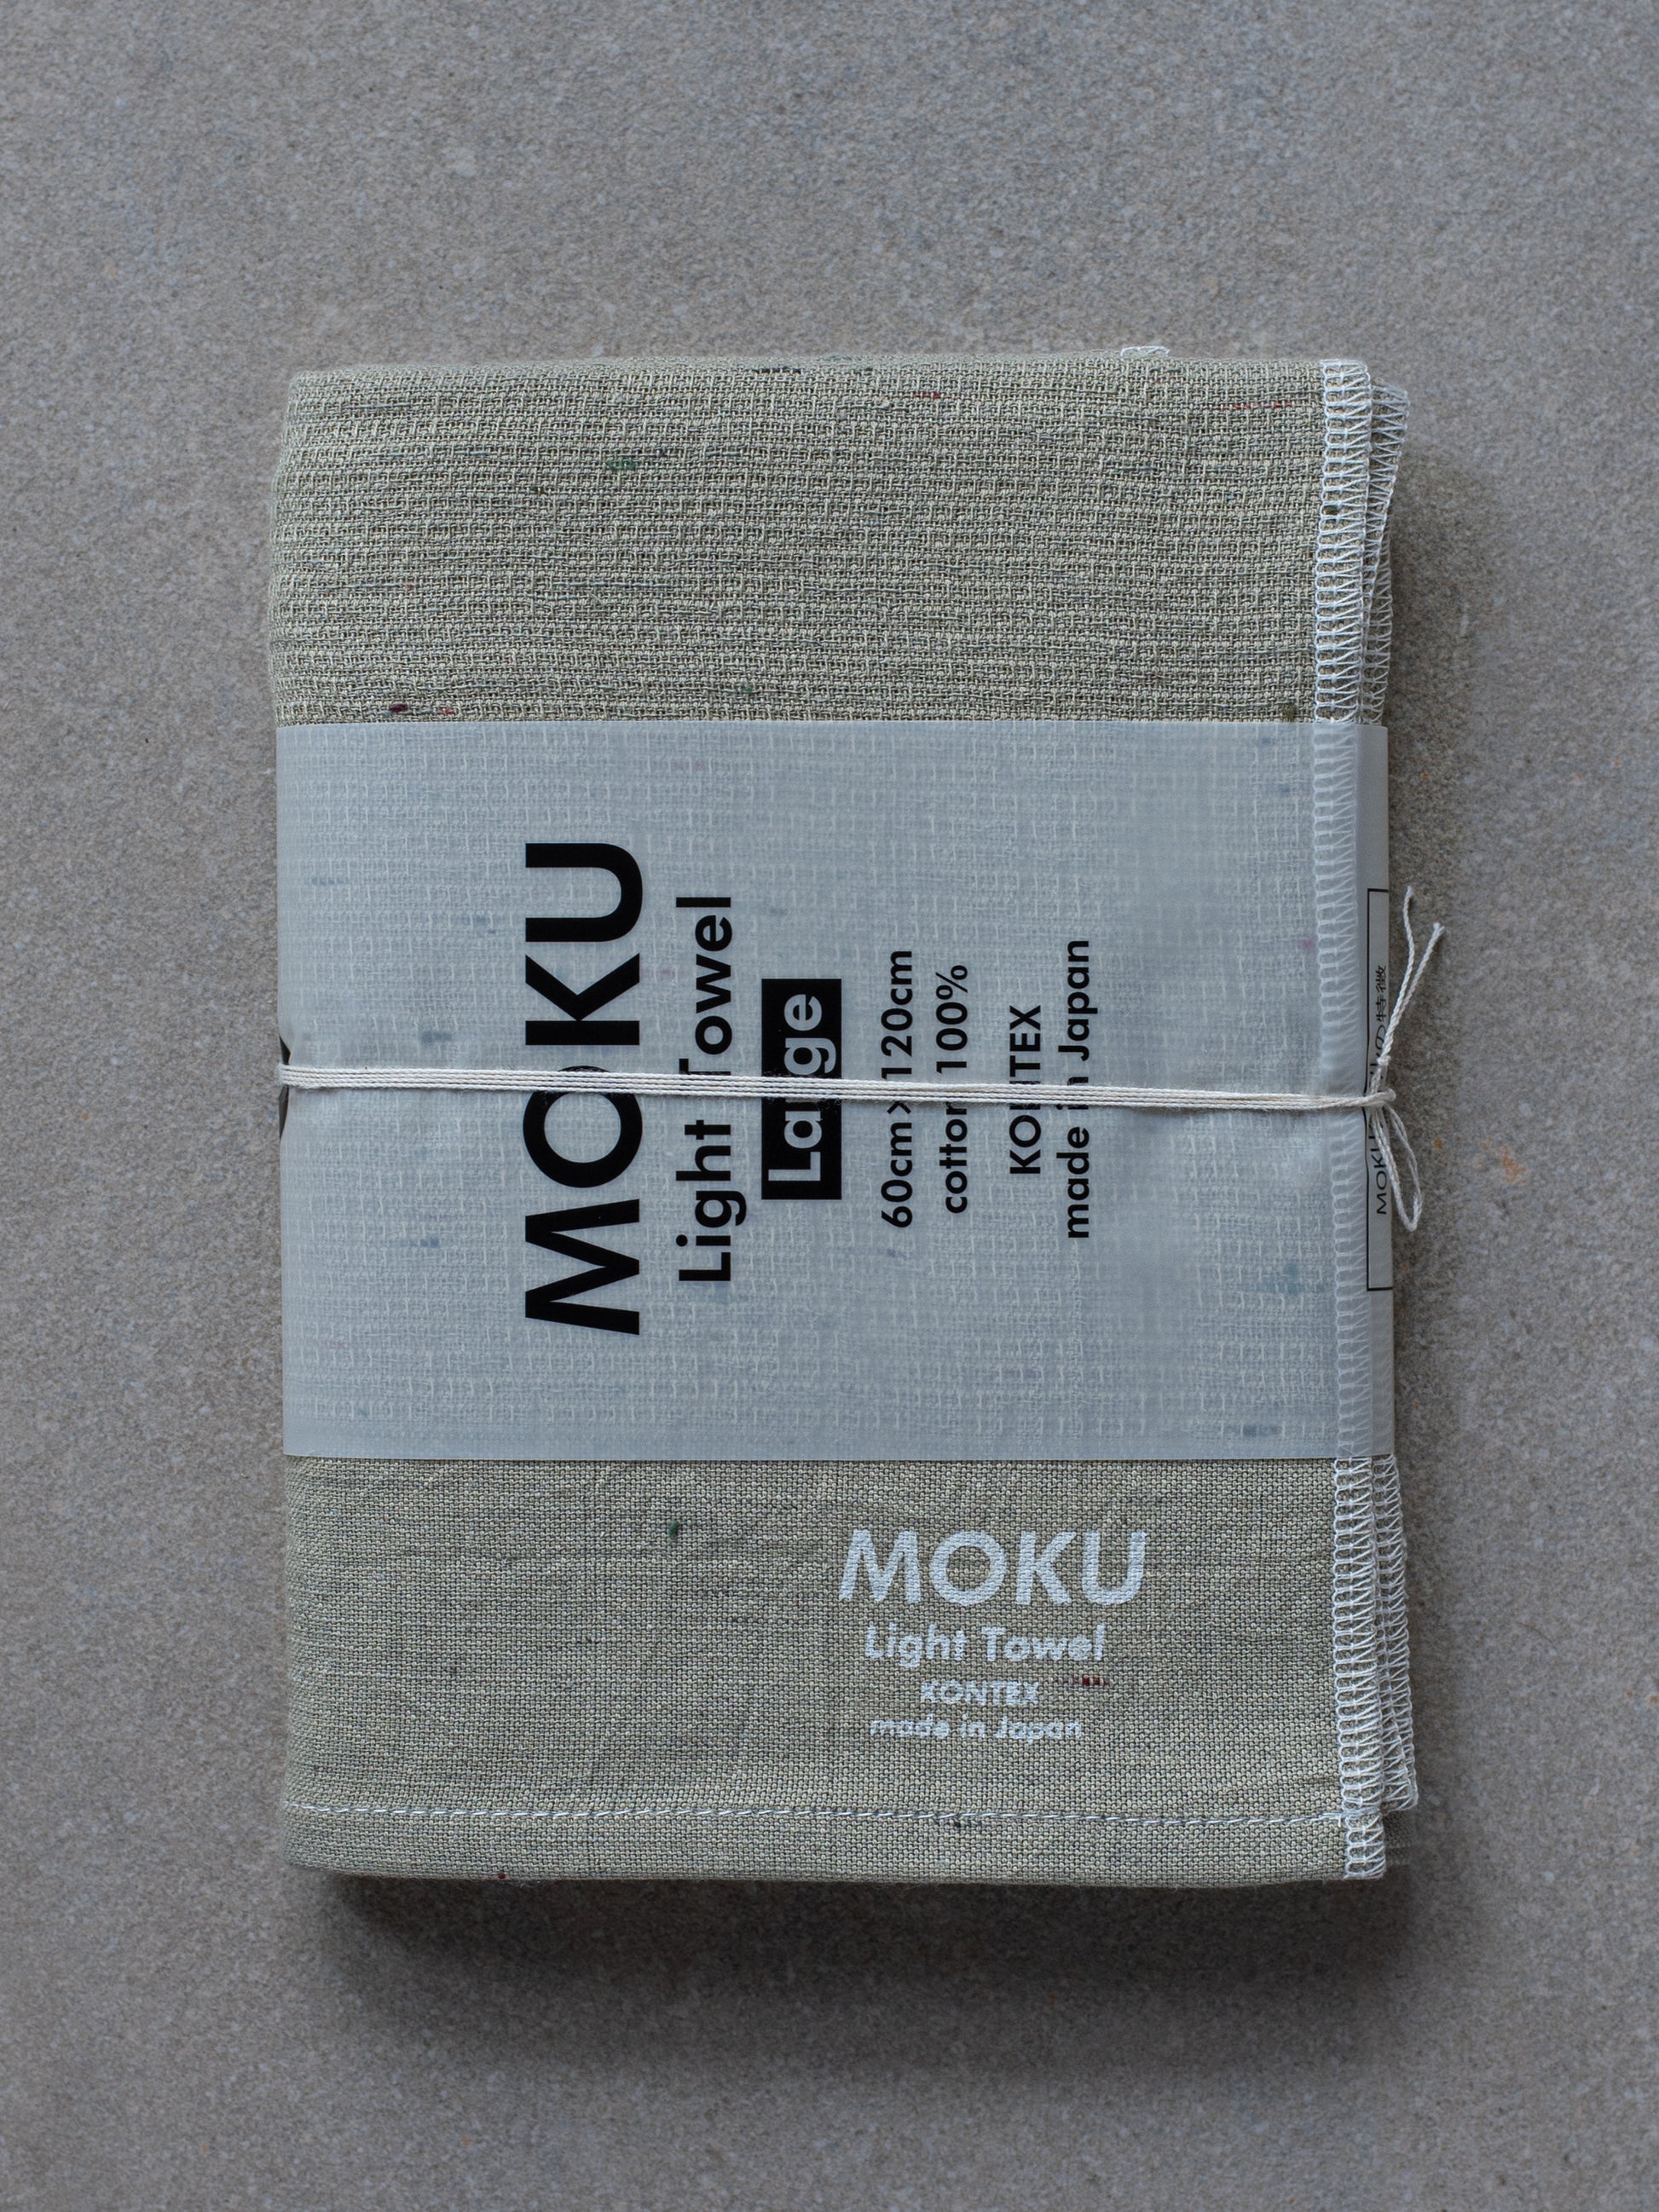 Kontex Moku Light Towel Large